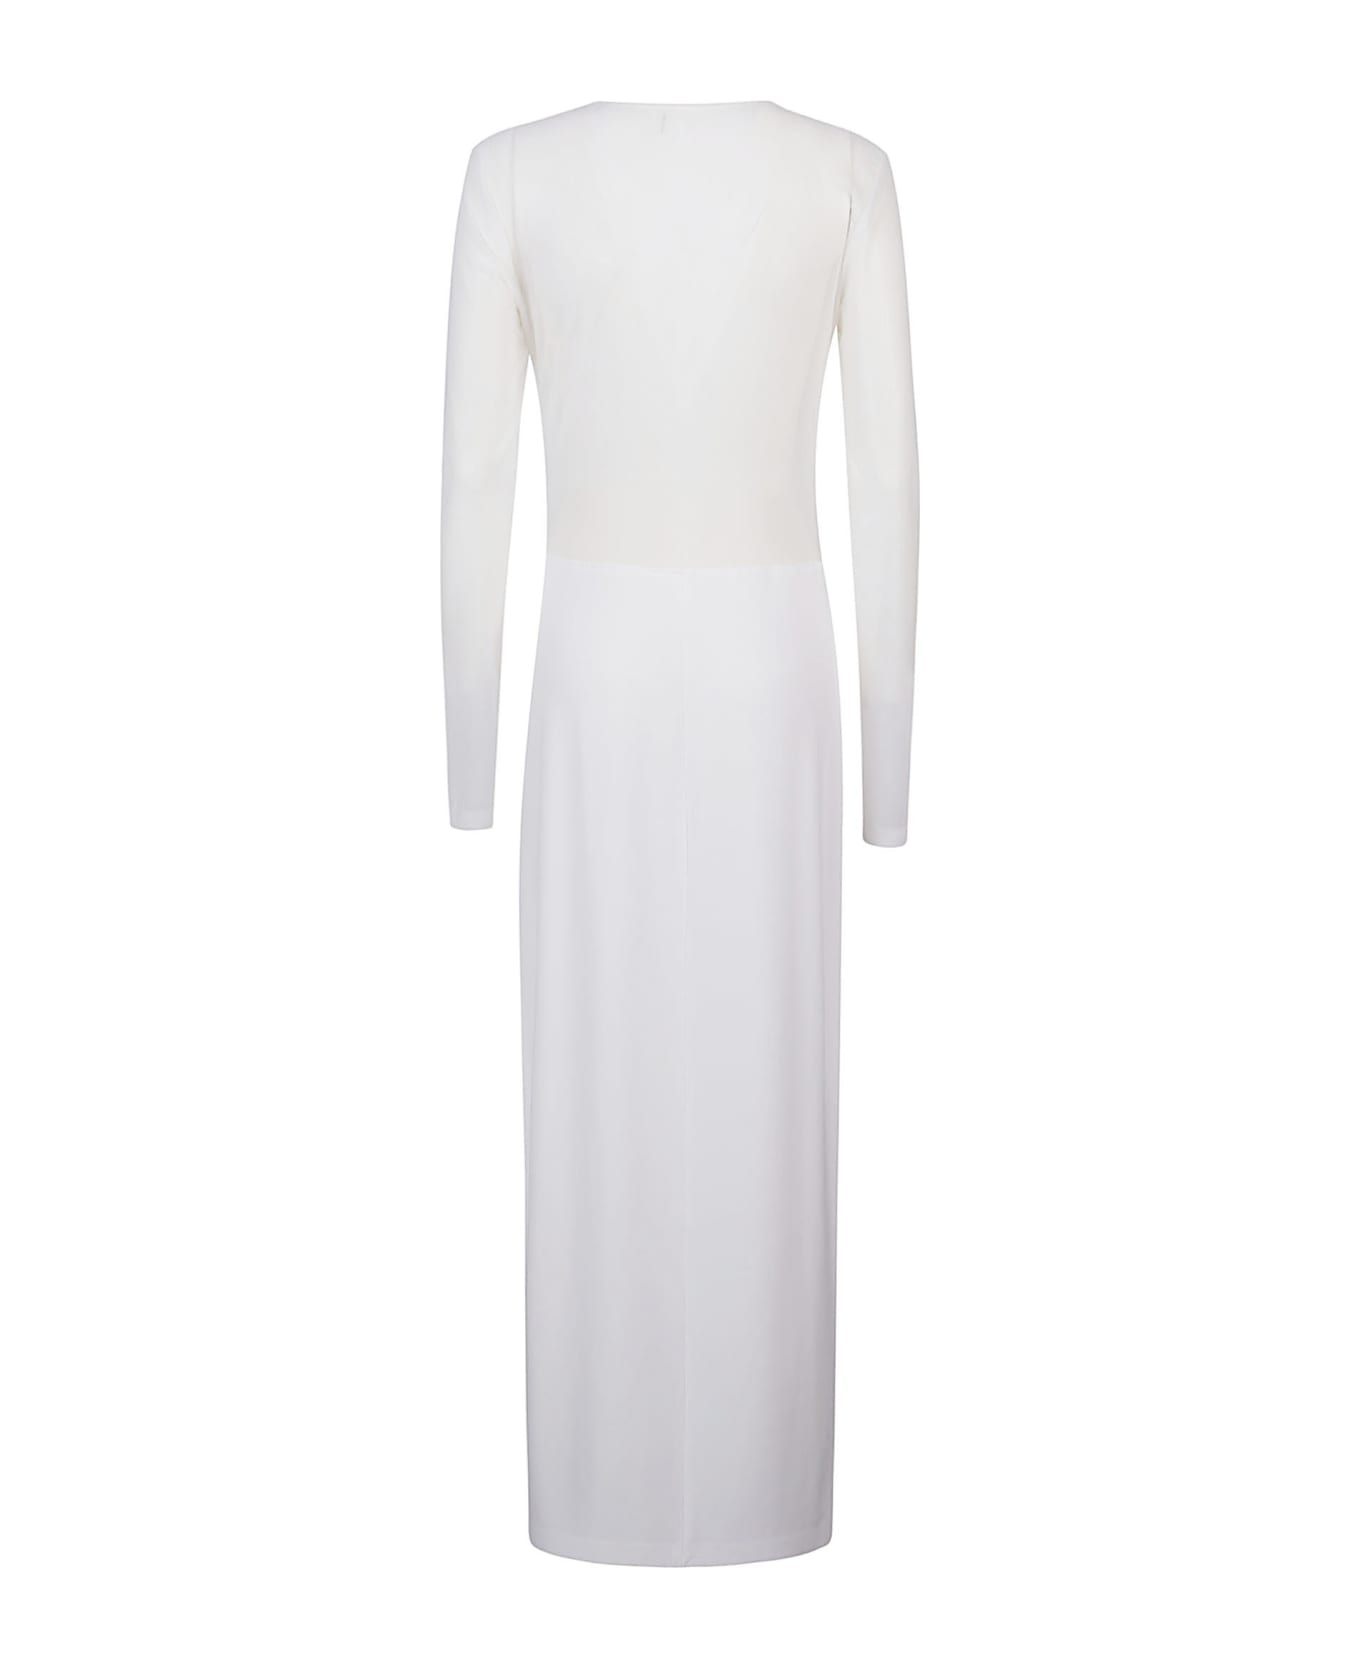 Norma Kamali Dash Dash Side Slit Dress - White/snow